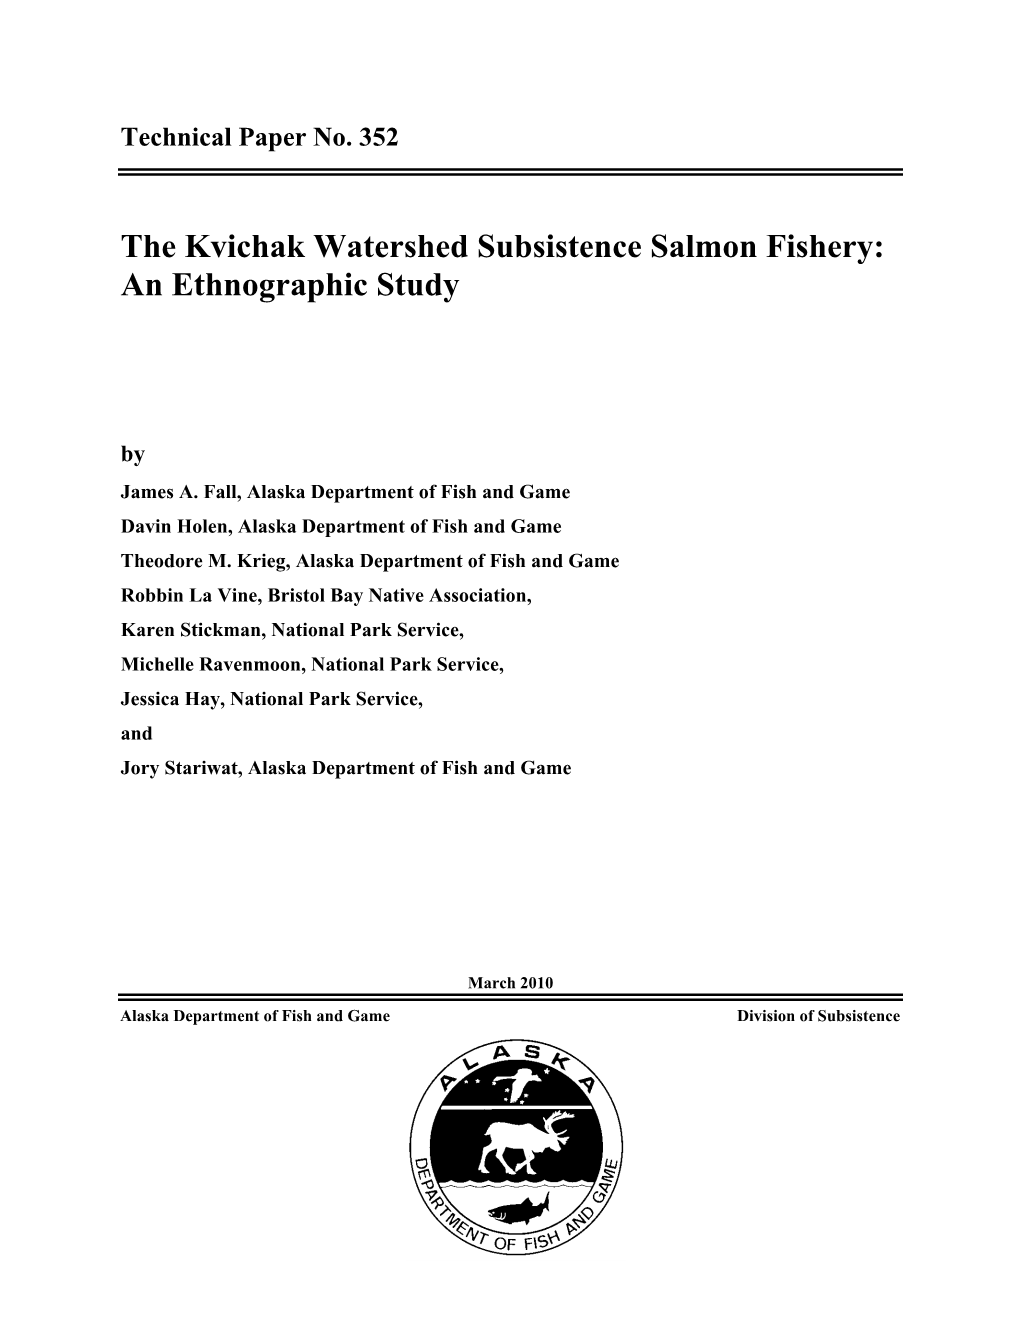 Kvichak Watershed Subsistence Salmon Fishery: an Ethnographic Study